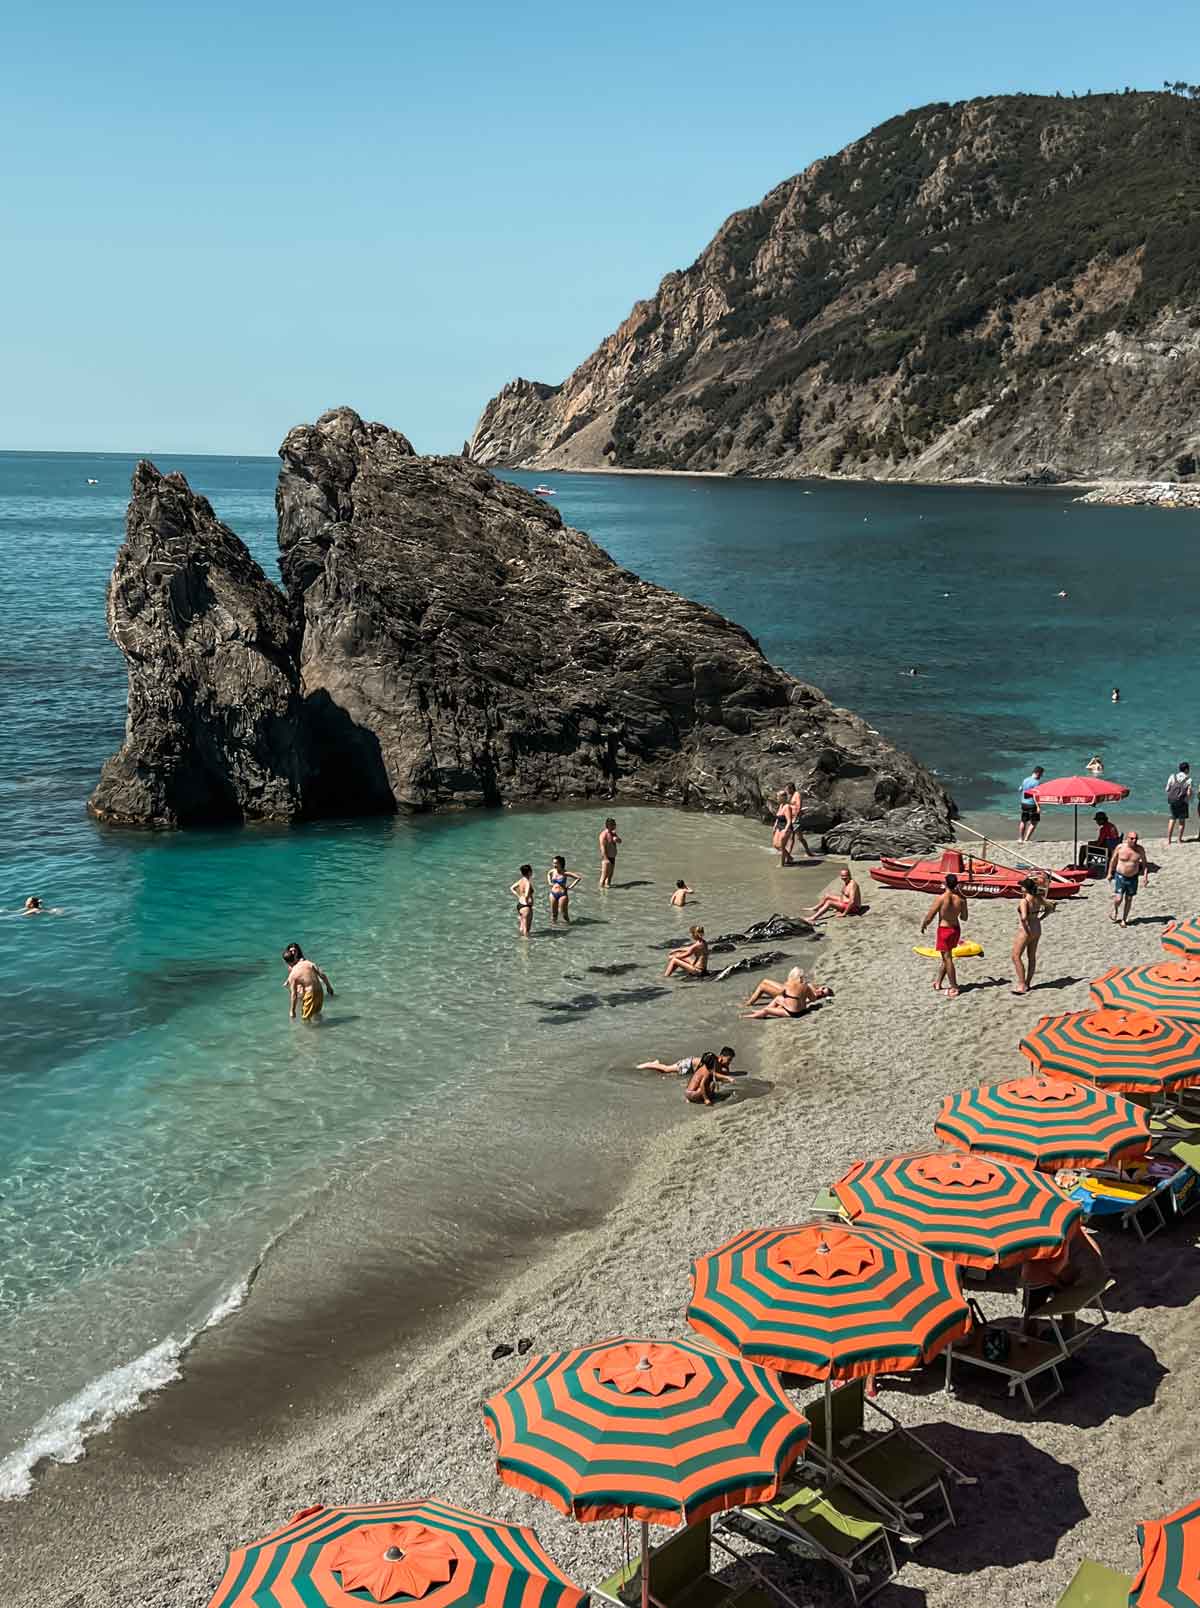 monterosso al mare beach clear blue water with green & orange parasols line the shore